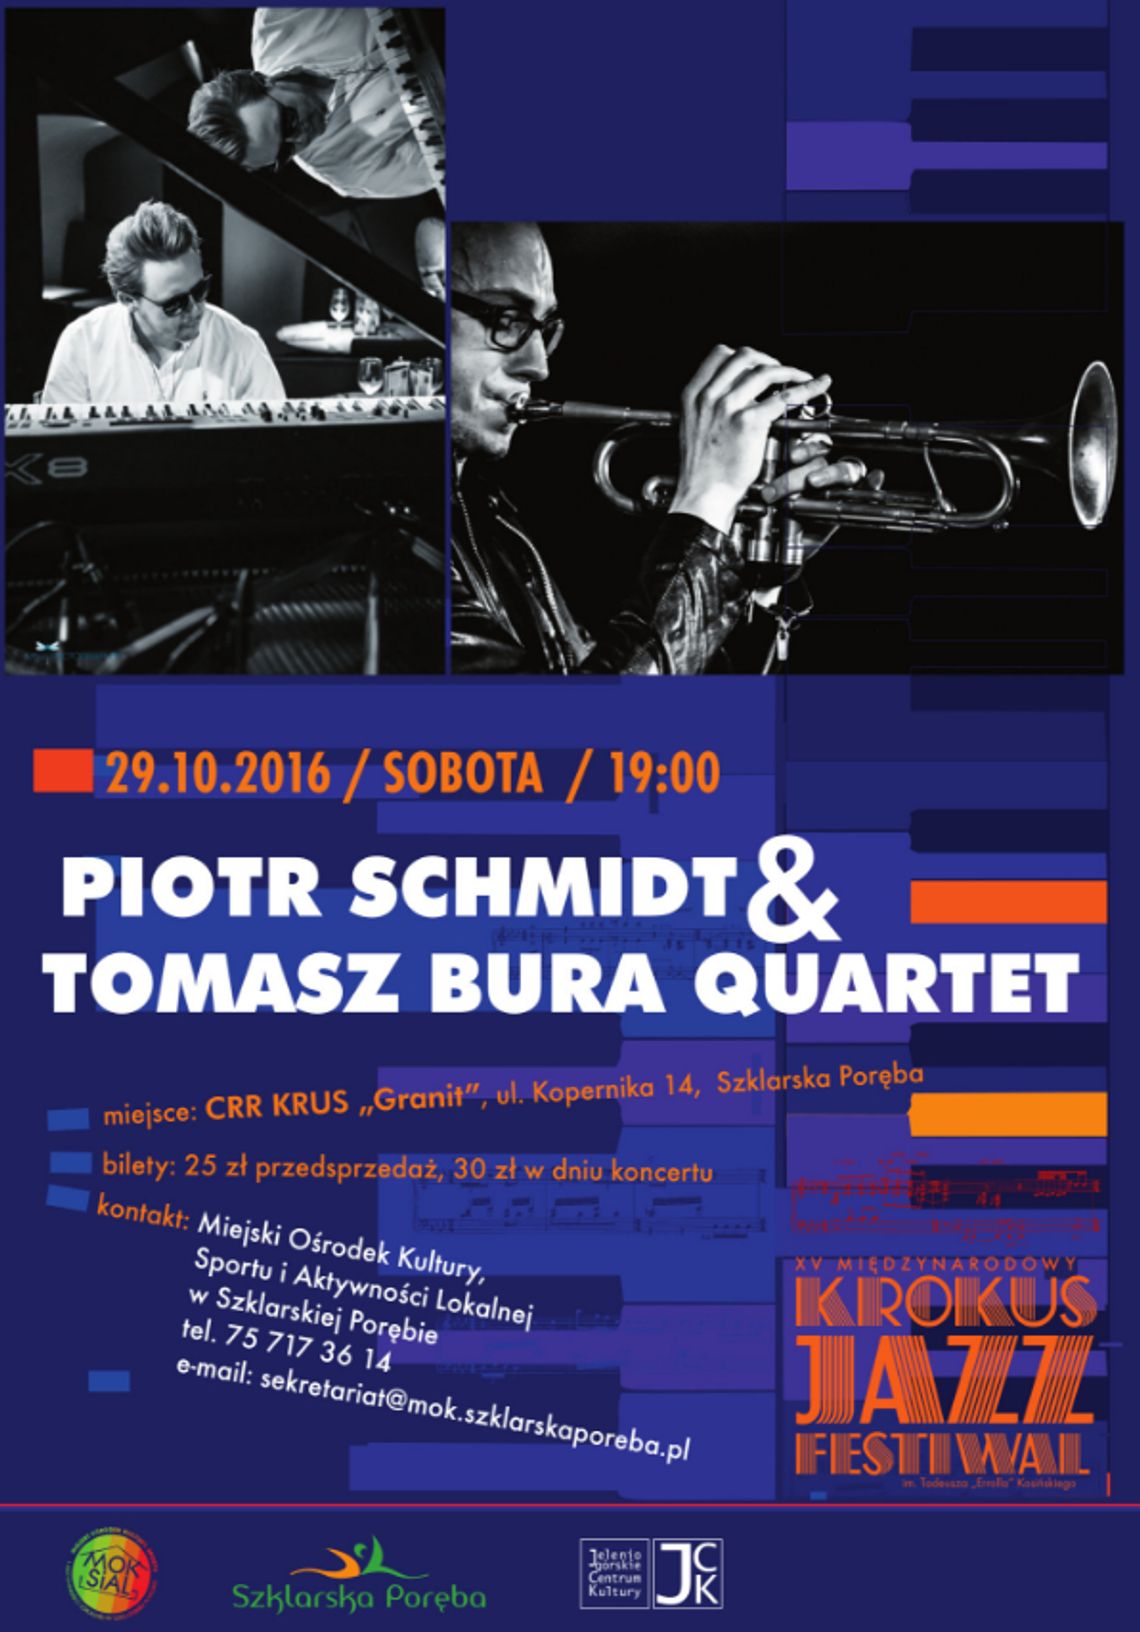 Piotr Schmidt & Tomasz Bura quartet